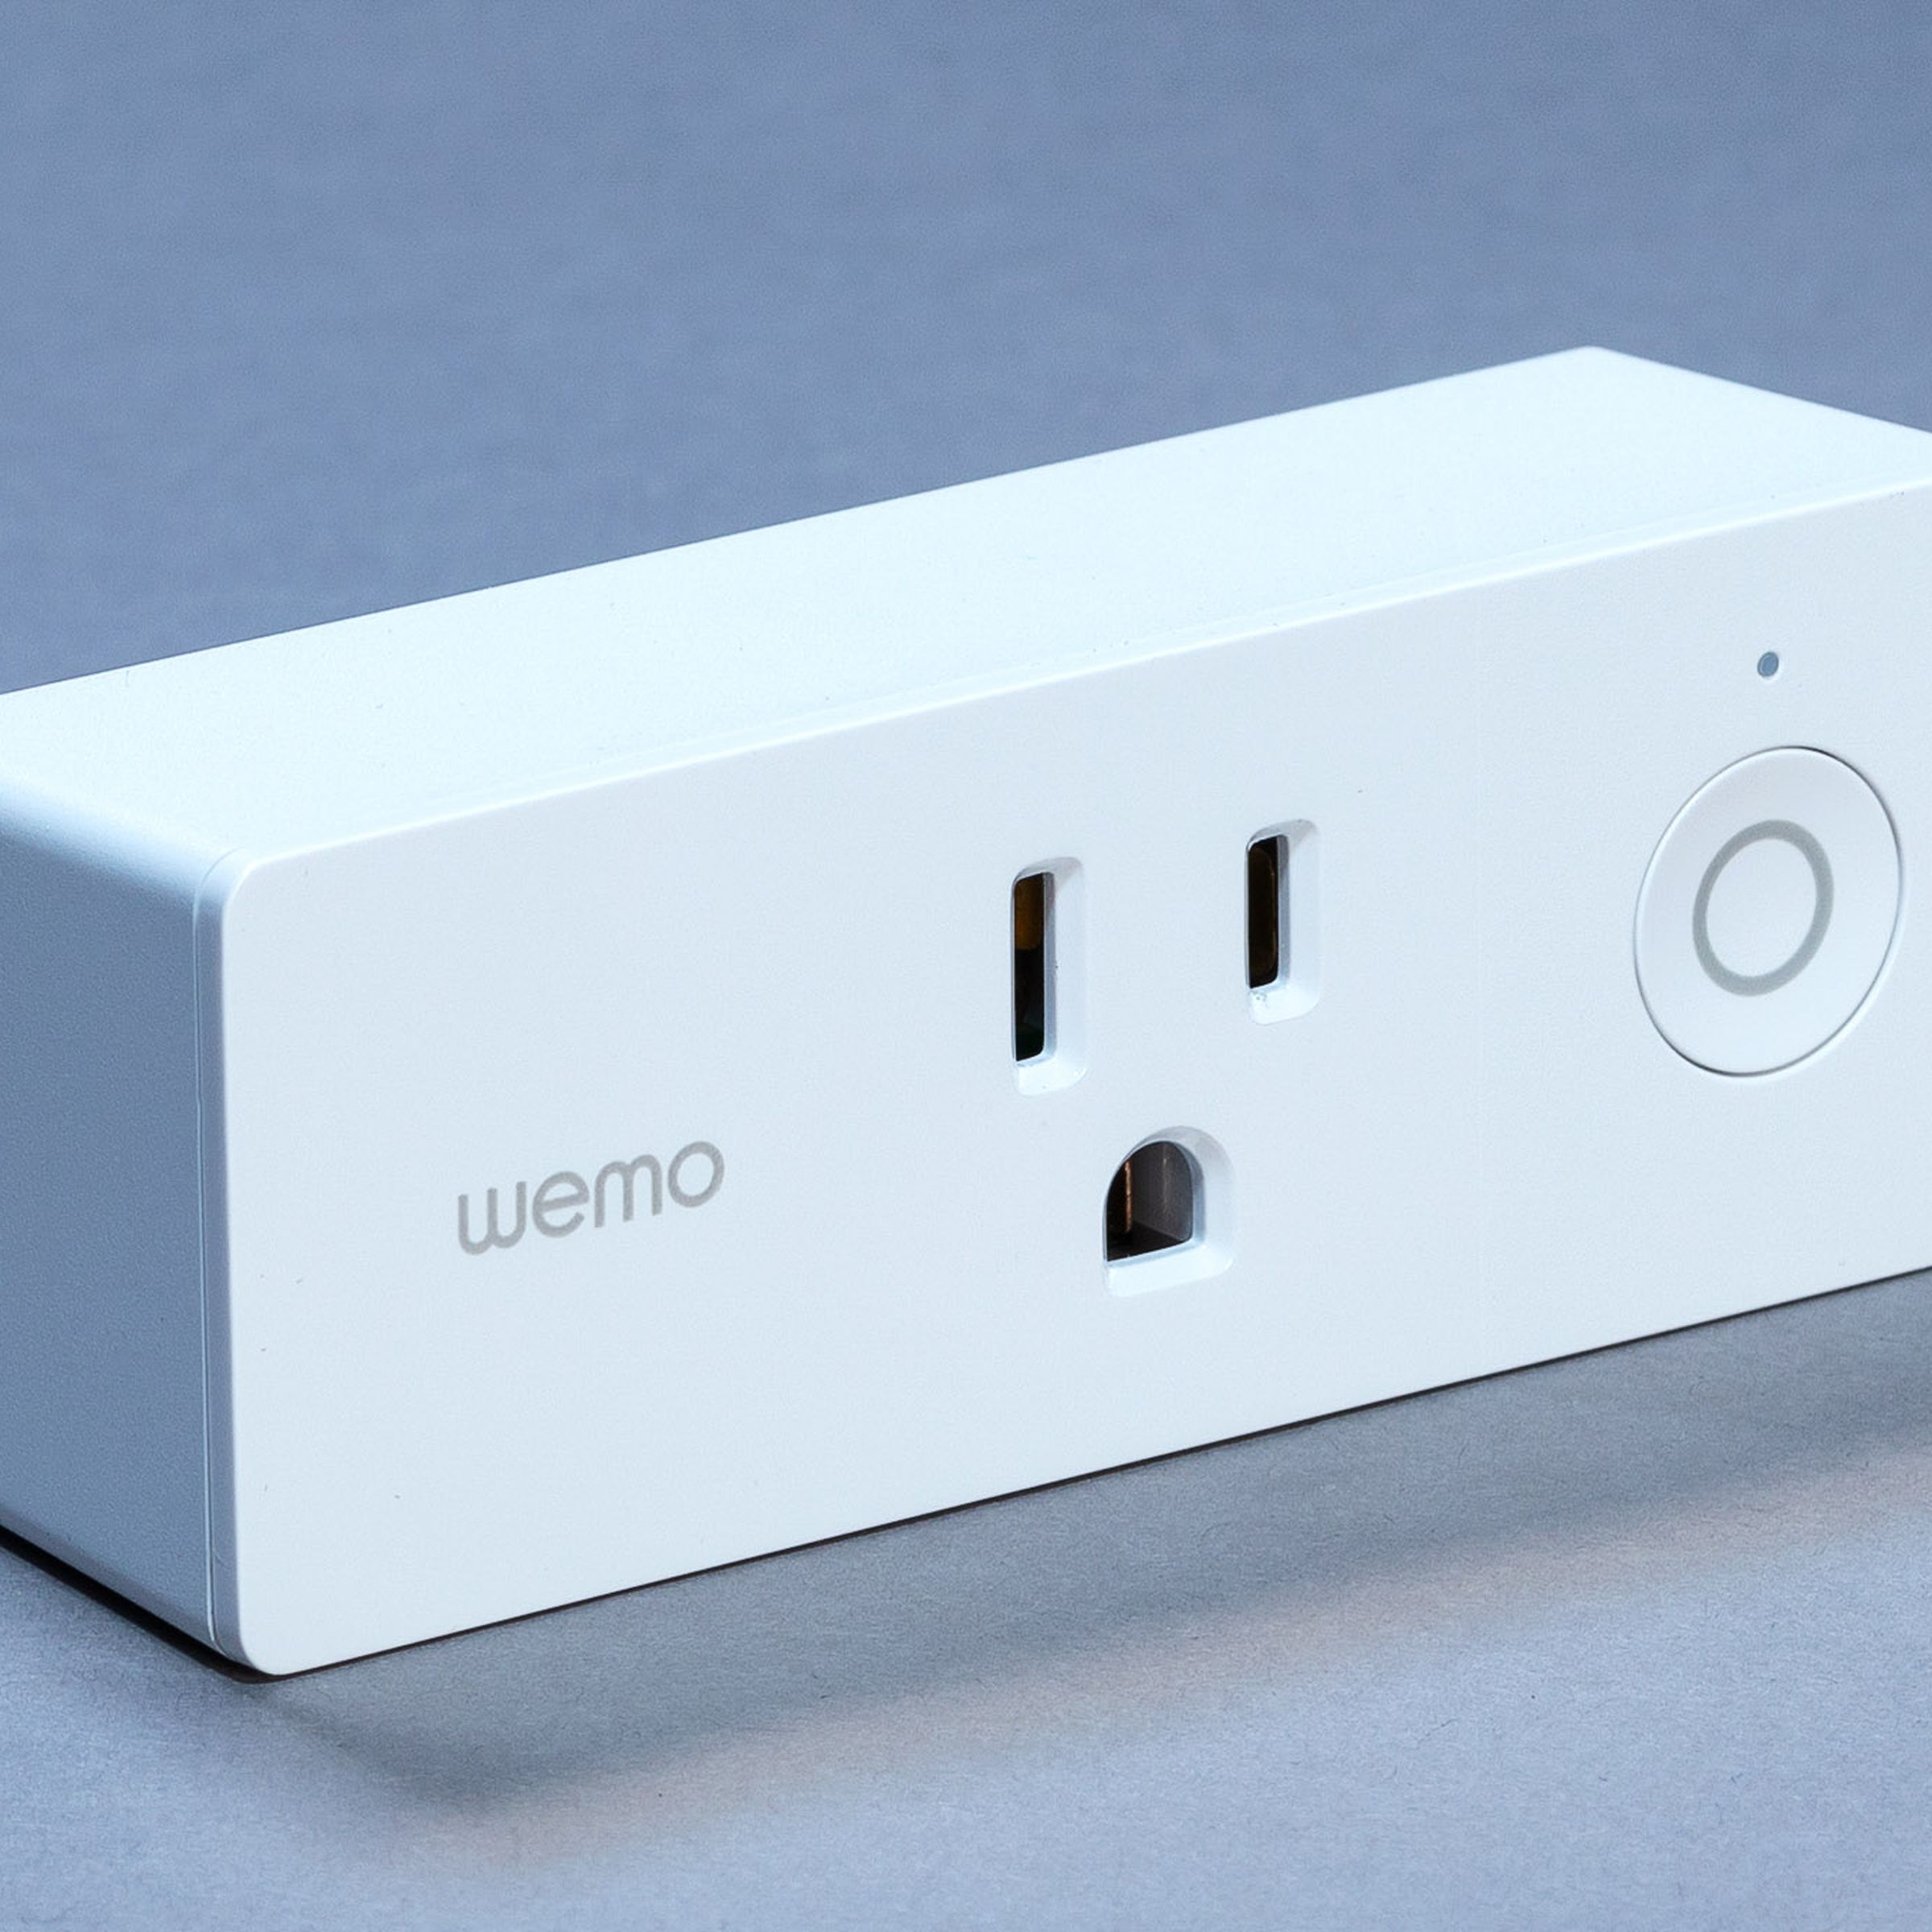 A Wemo Smart Plug Mini, front view